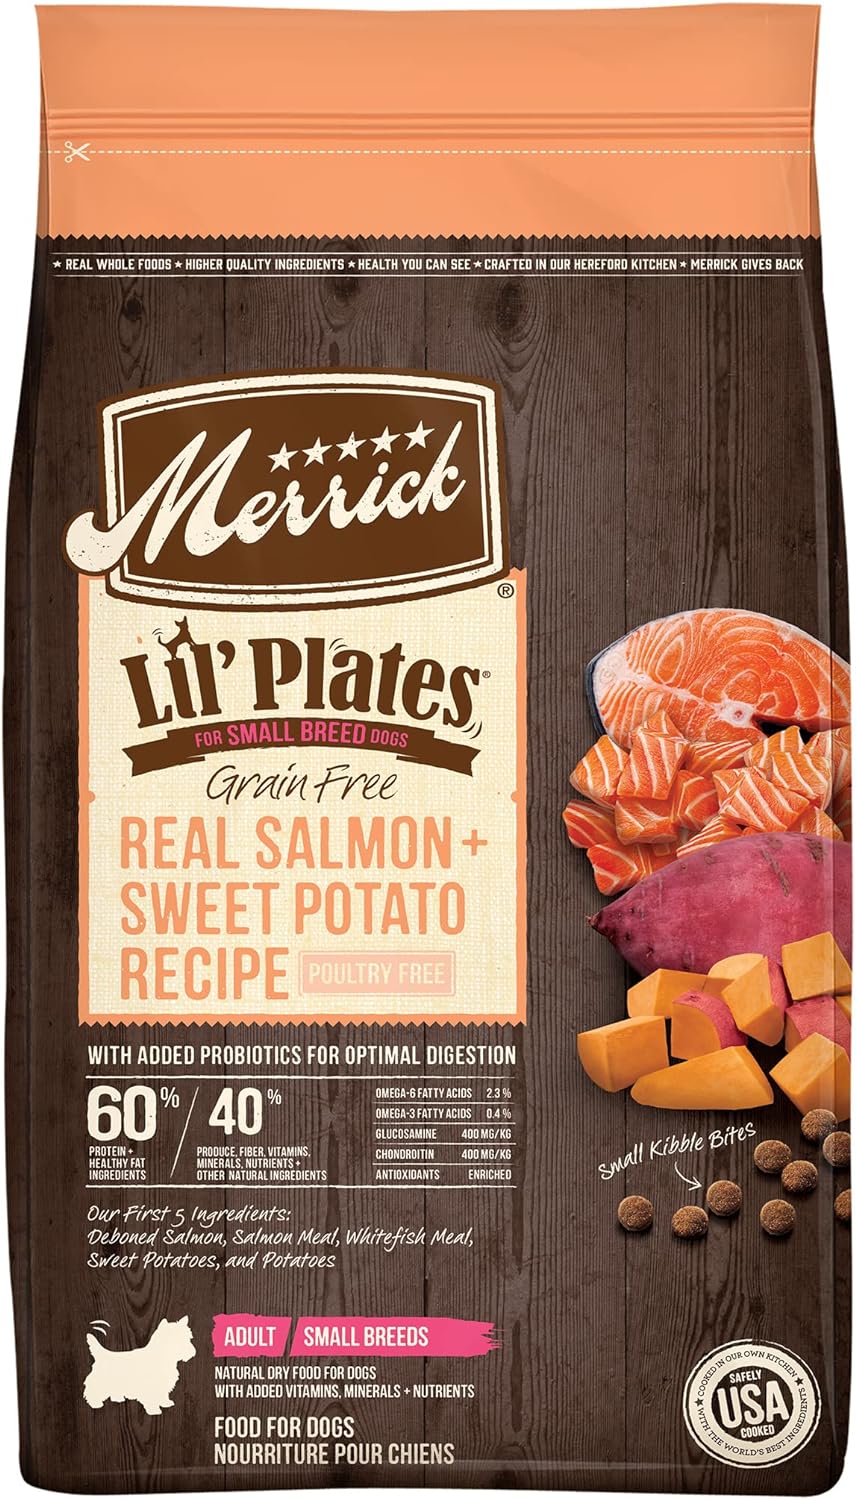 Merrick Lil’ Plates Grain-Free Real Salmon + Sweet Potatoes Recipe Dry Dog Food – Gallery Image 1